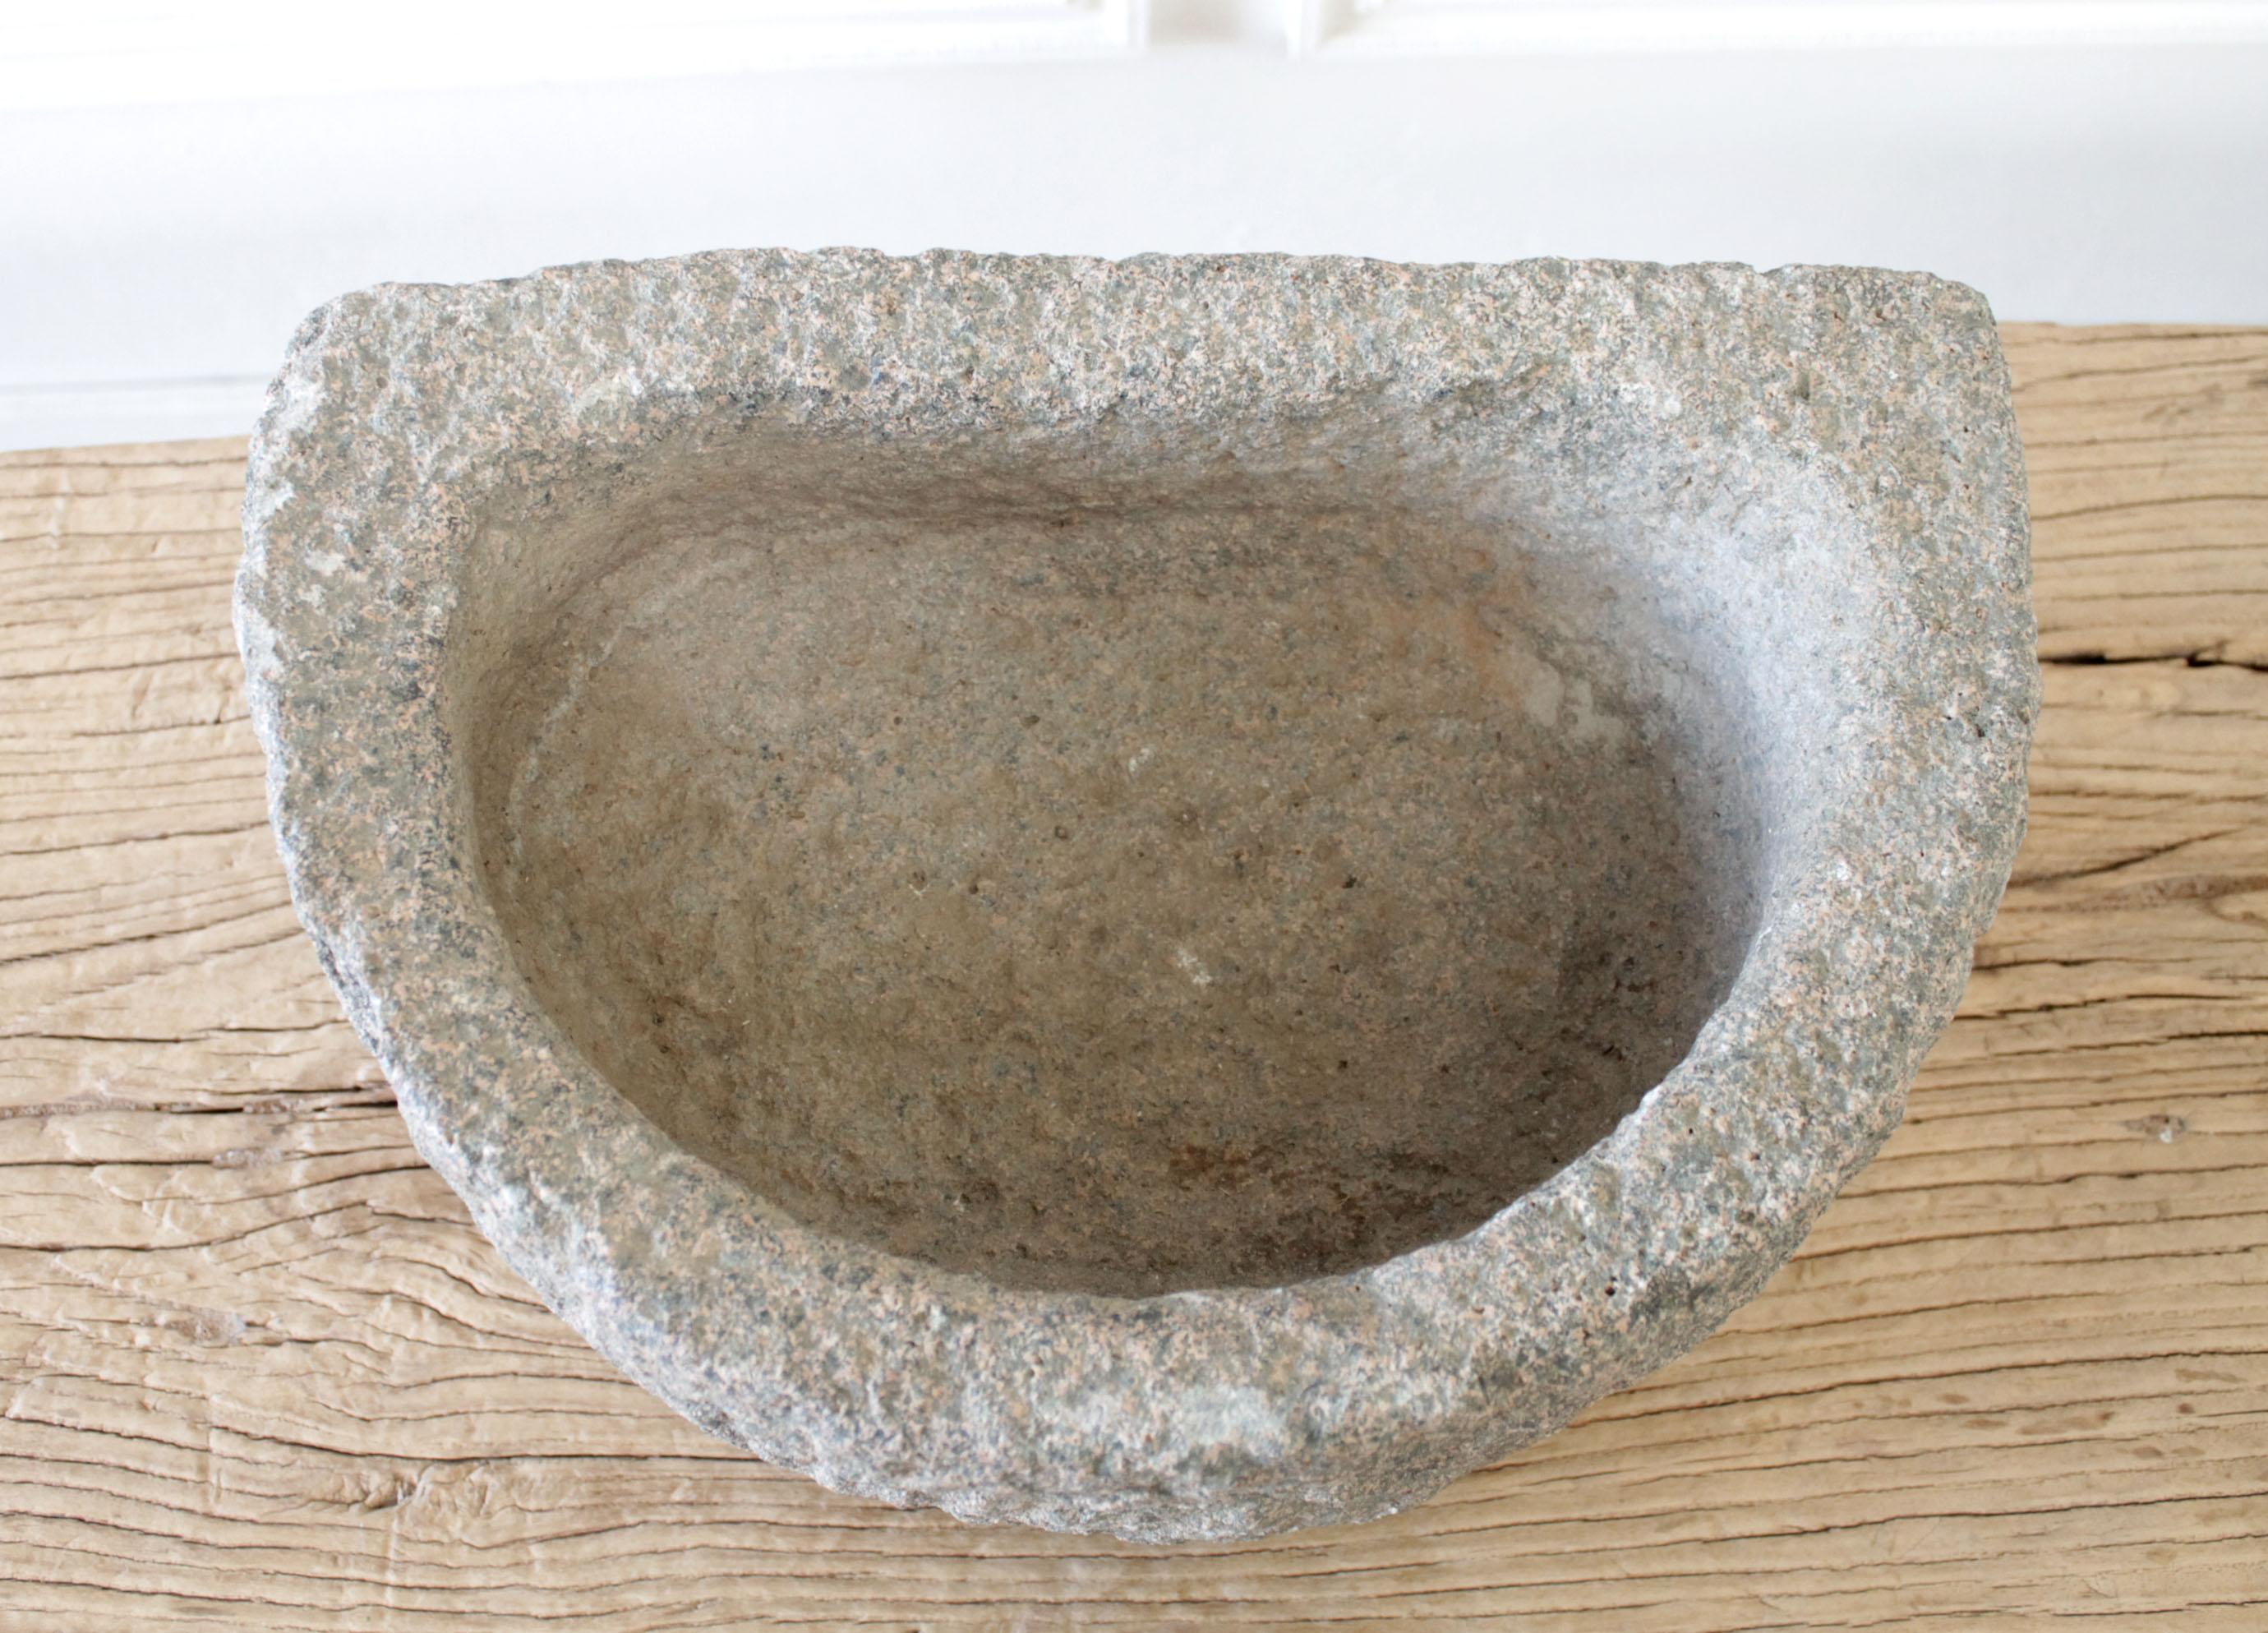 Vintage stone mortar sink or planter
Size: 16